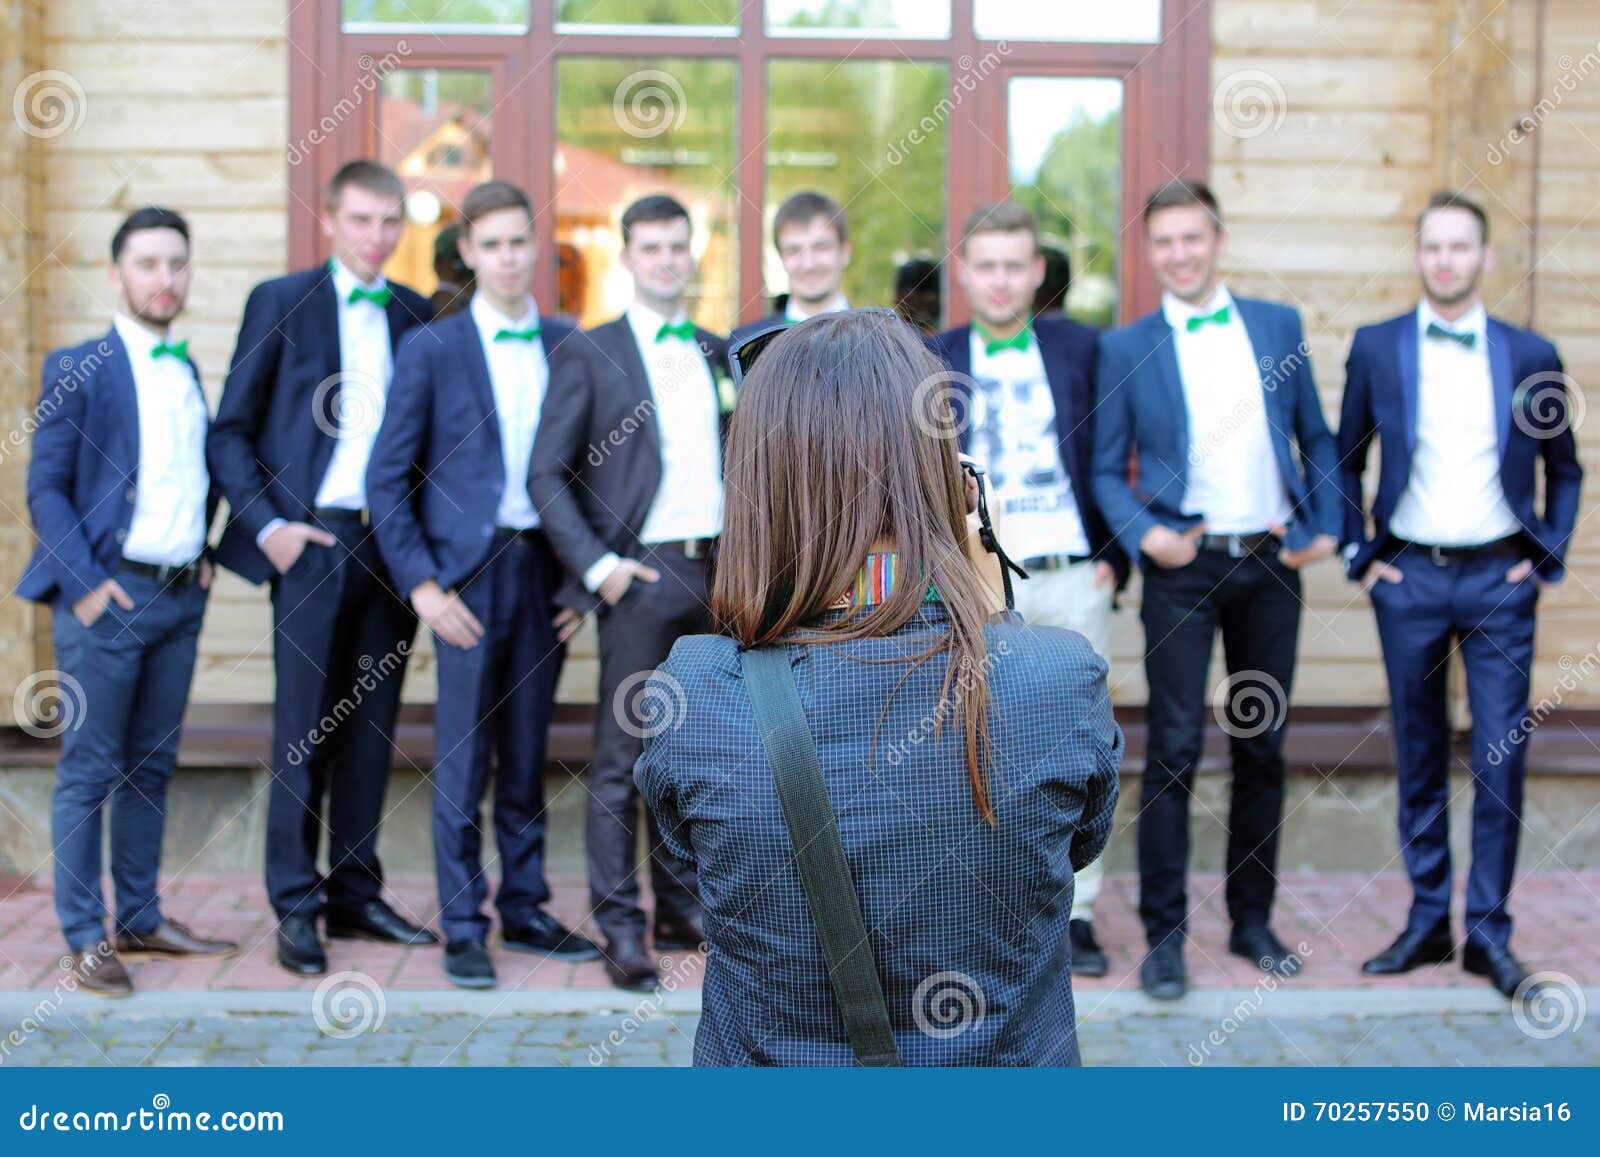 female wedding photographer in action